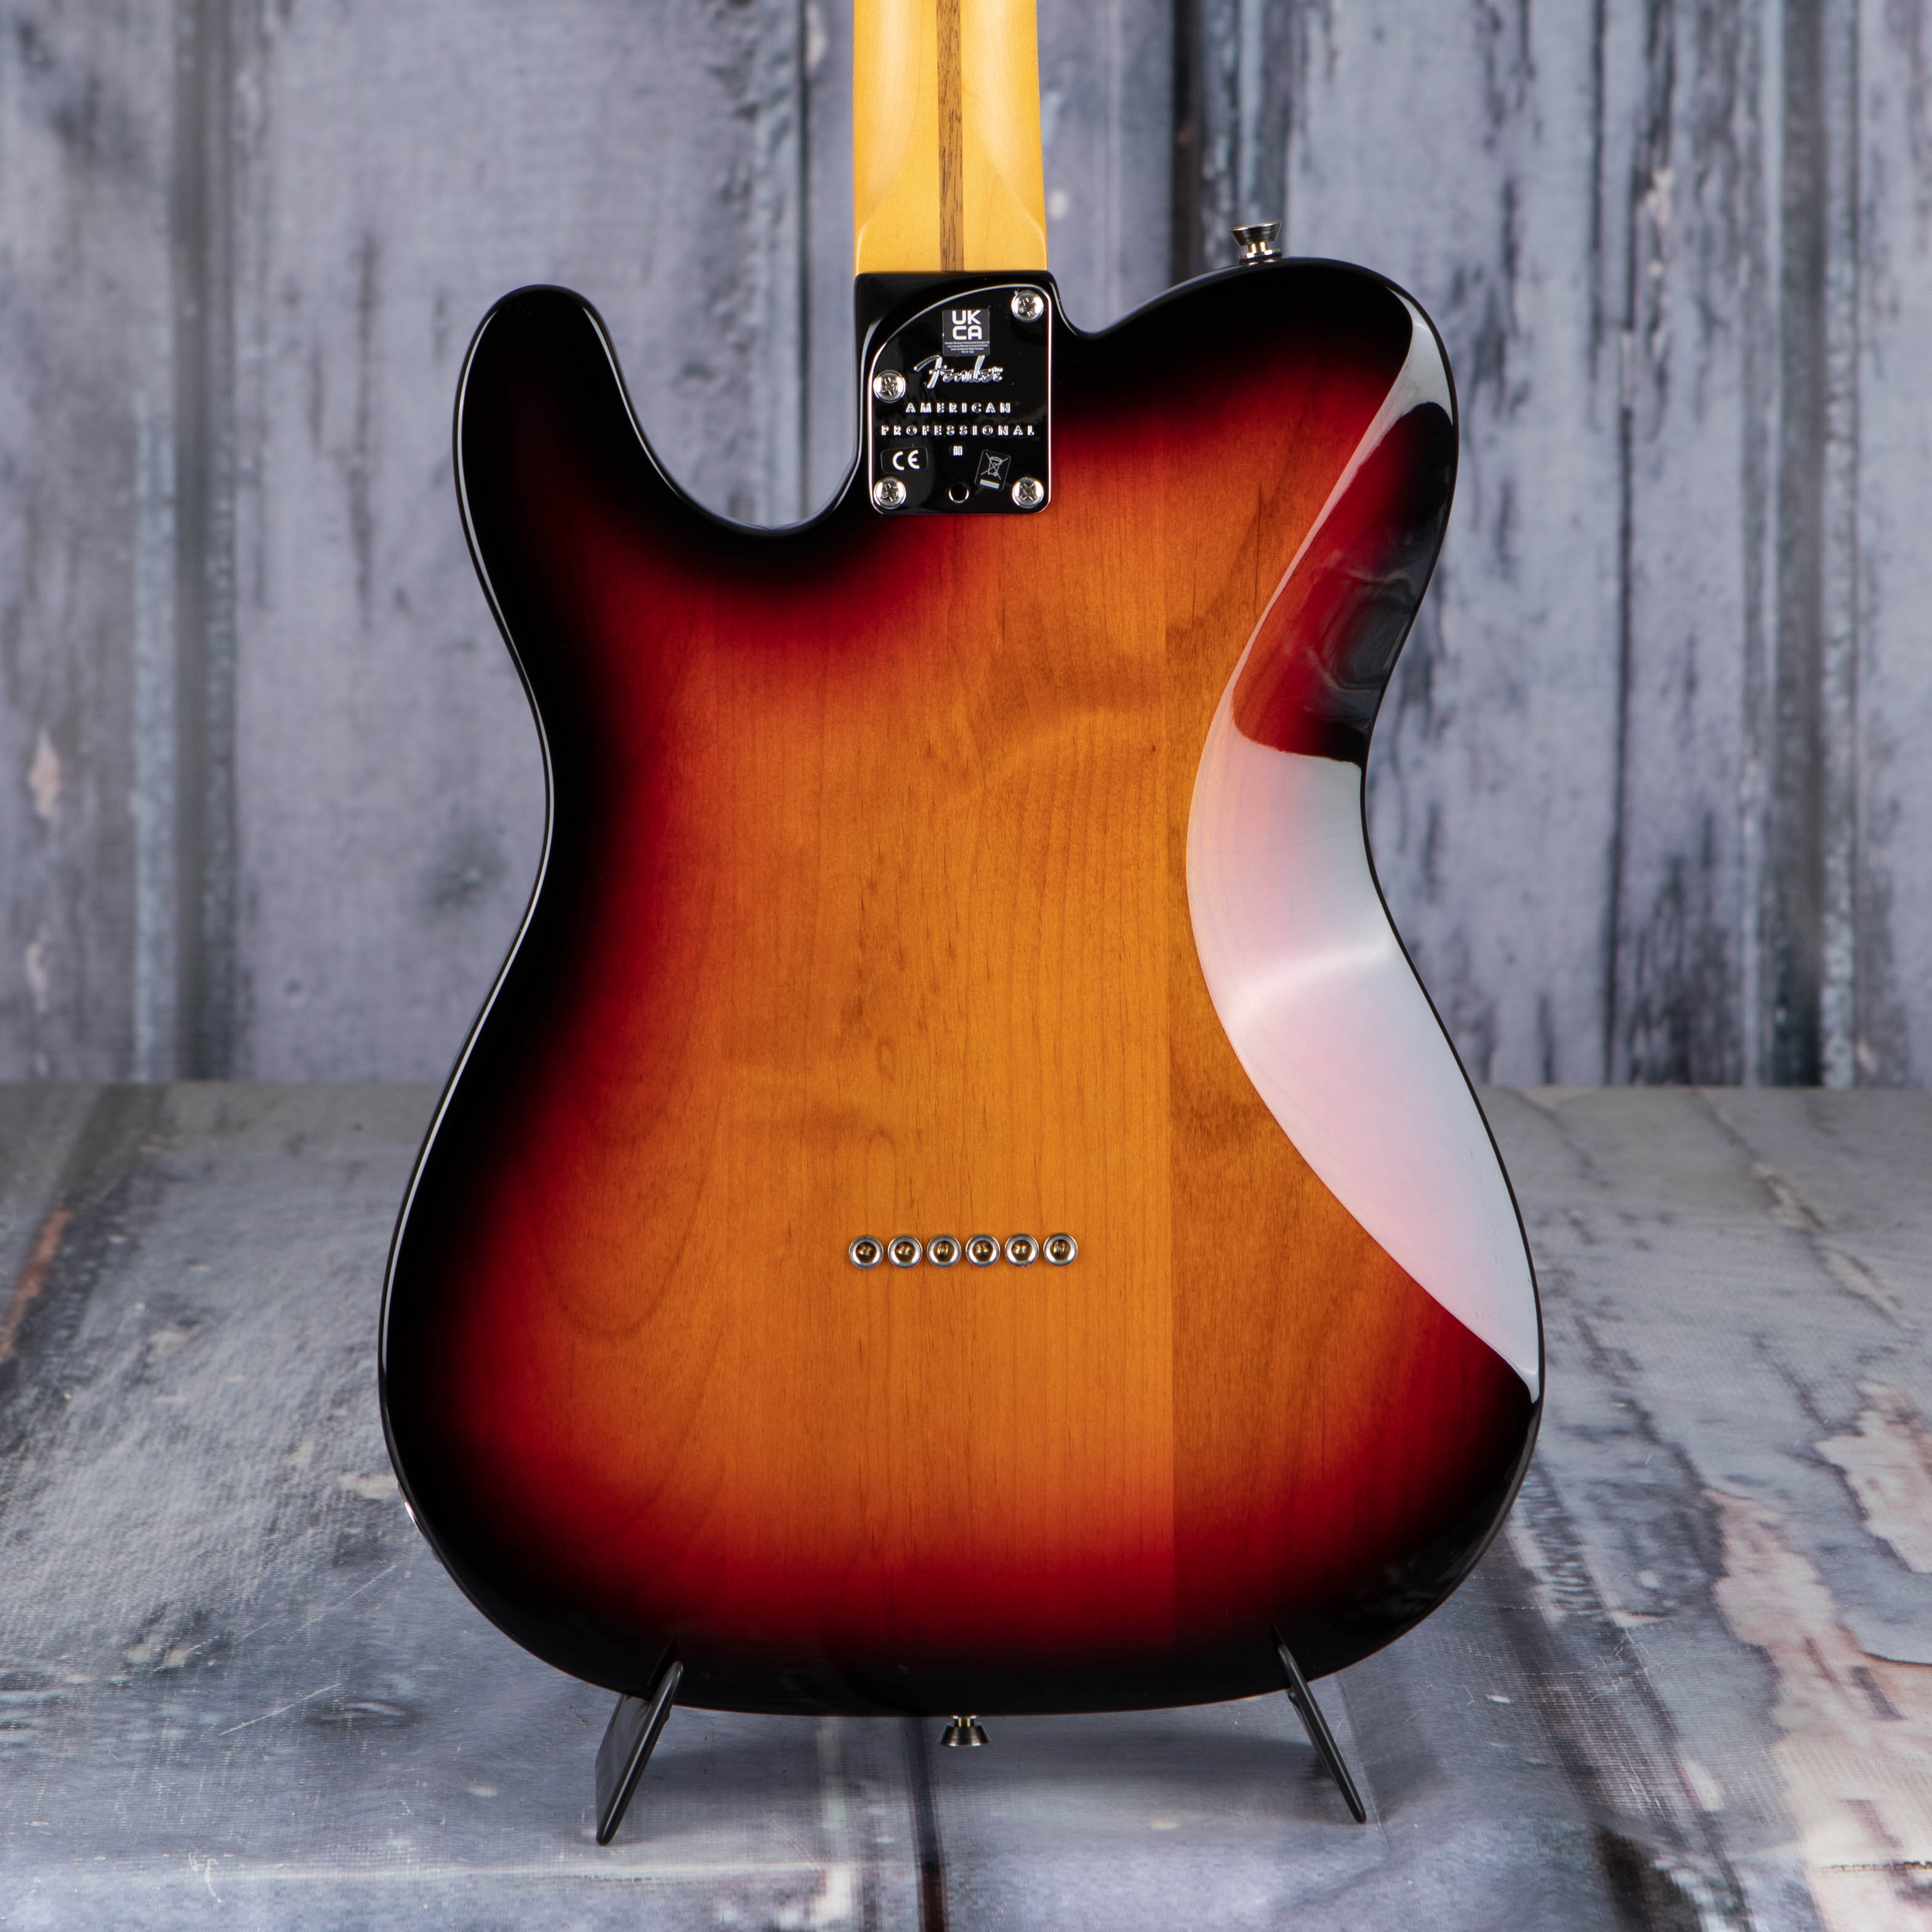 Fender American Professional II Telecaster Deluxe Electric Guitar, 3-Color Sunburst, back closeup